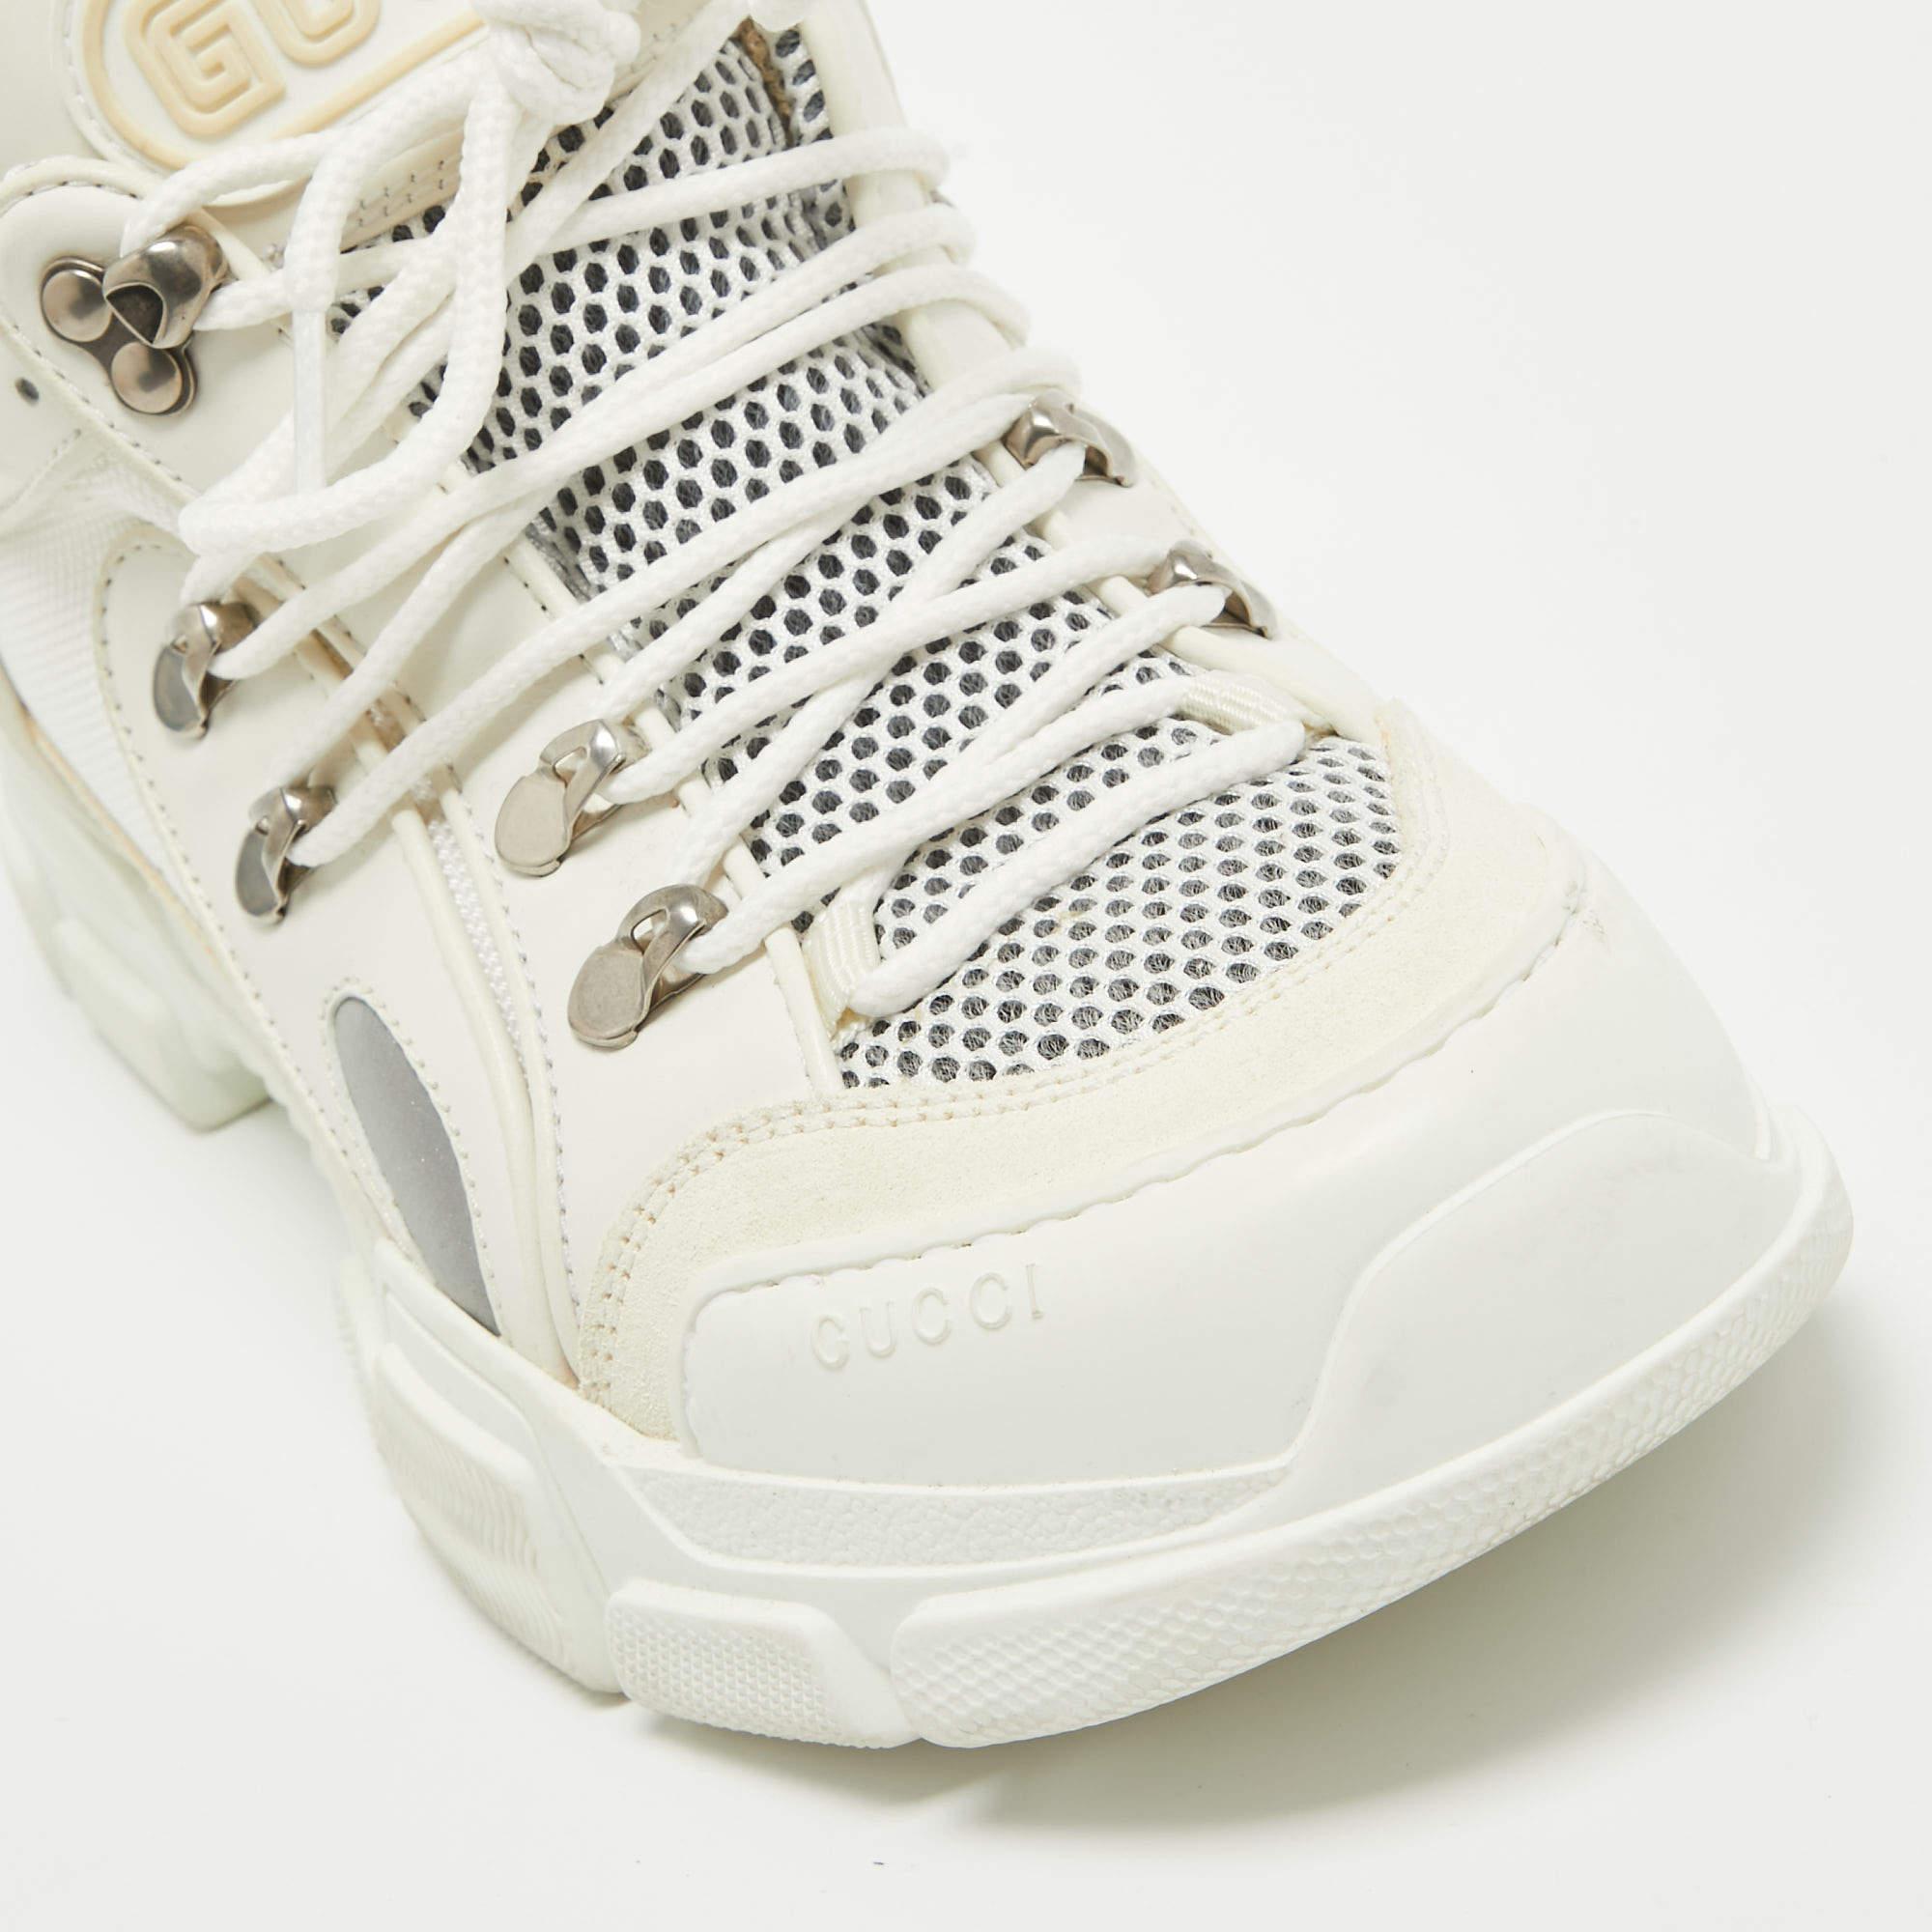 Gucci White/Cream Canvas Leather Flashtrek Sneakers Size 39.5 For Sale 2